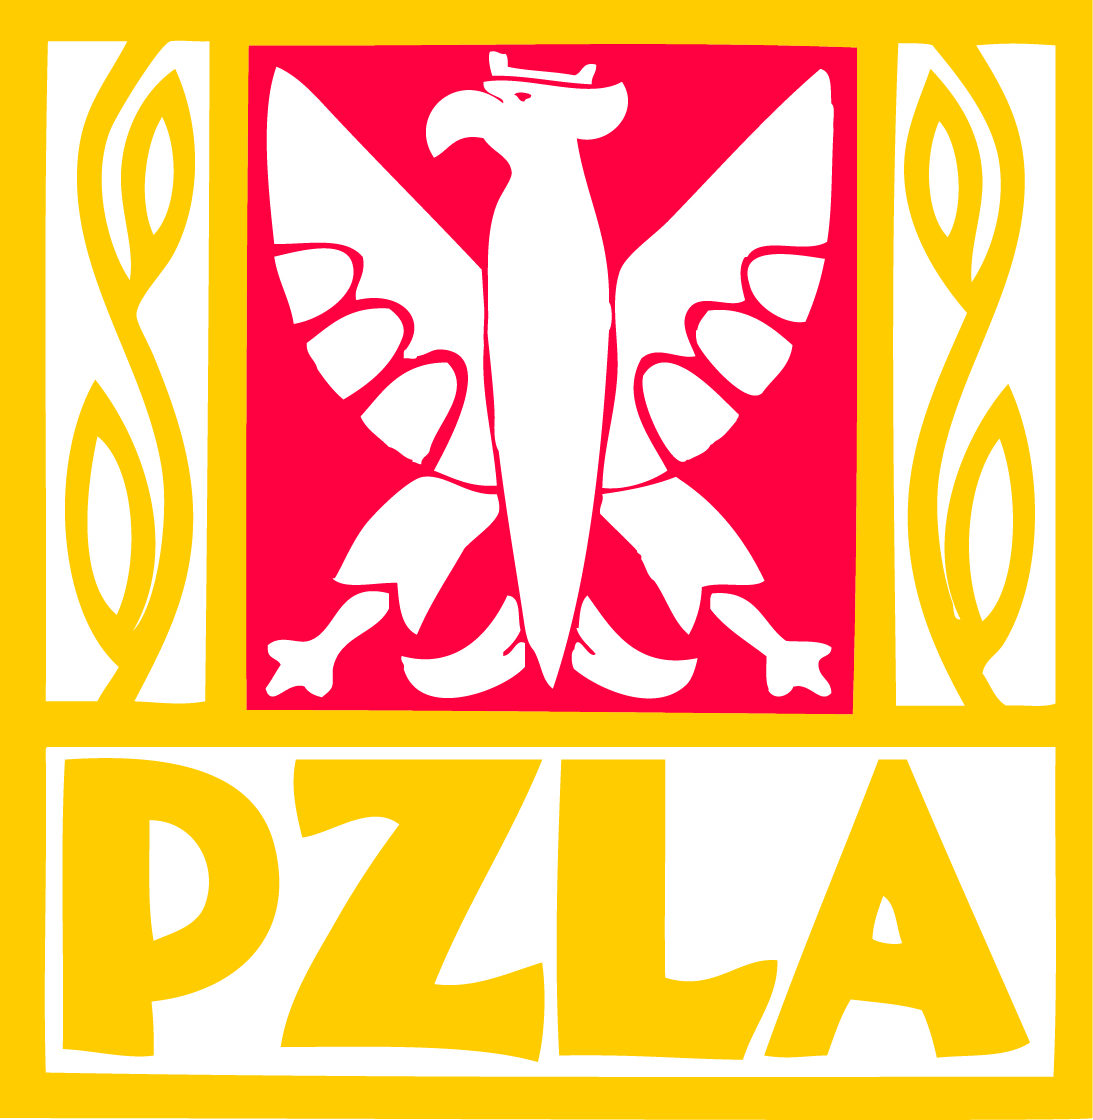 7634-pzla-logotyp-jpg